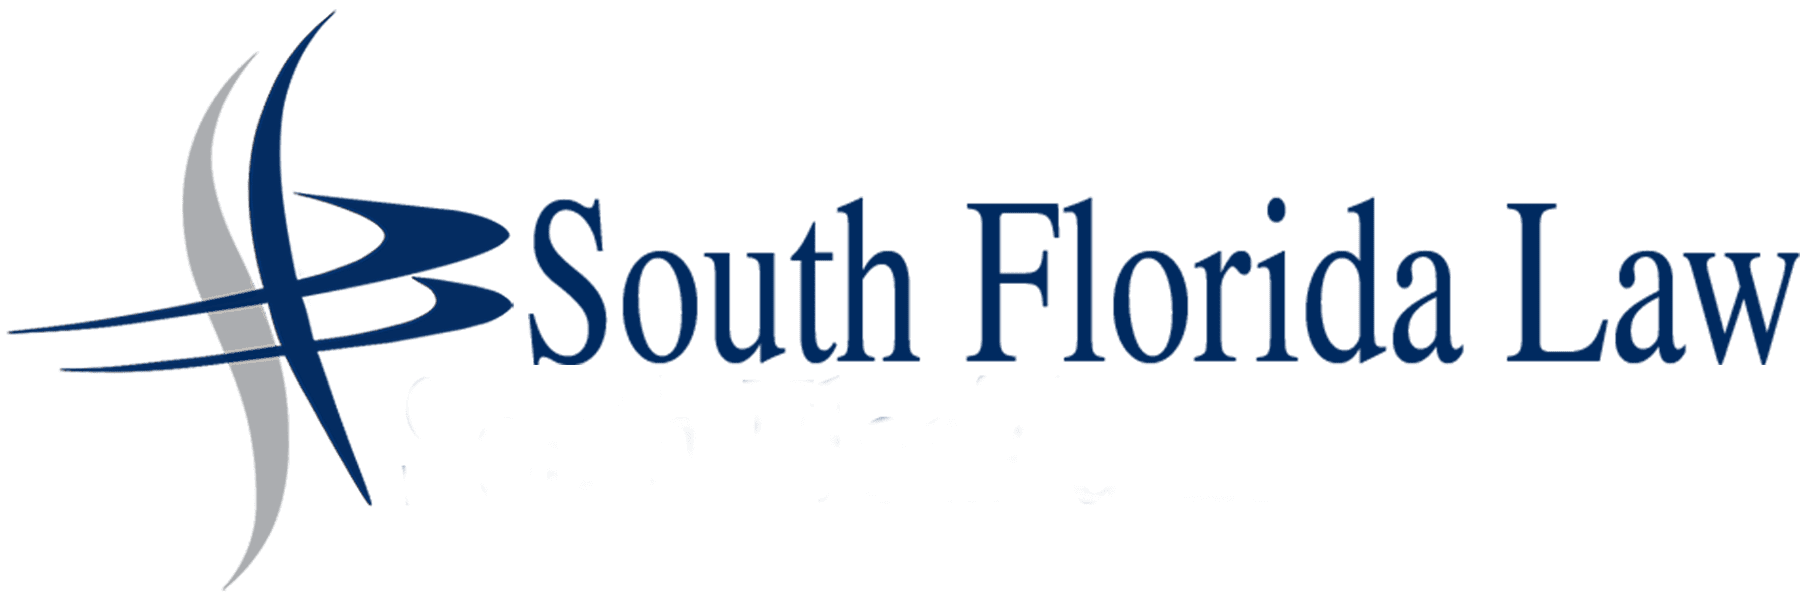 South Florida Law, PLLC